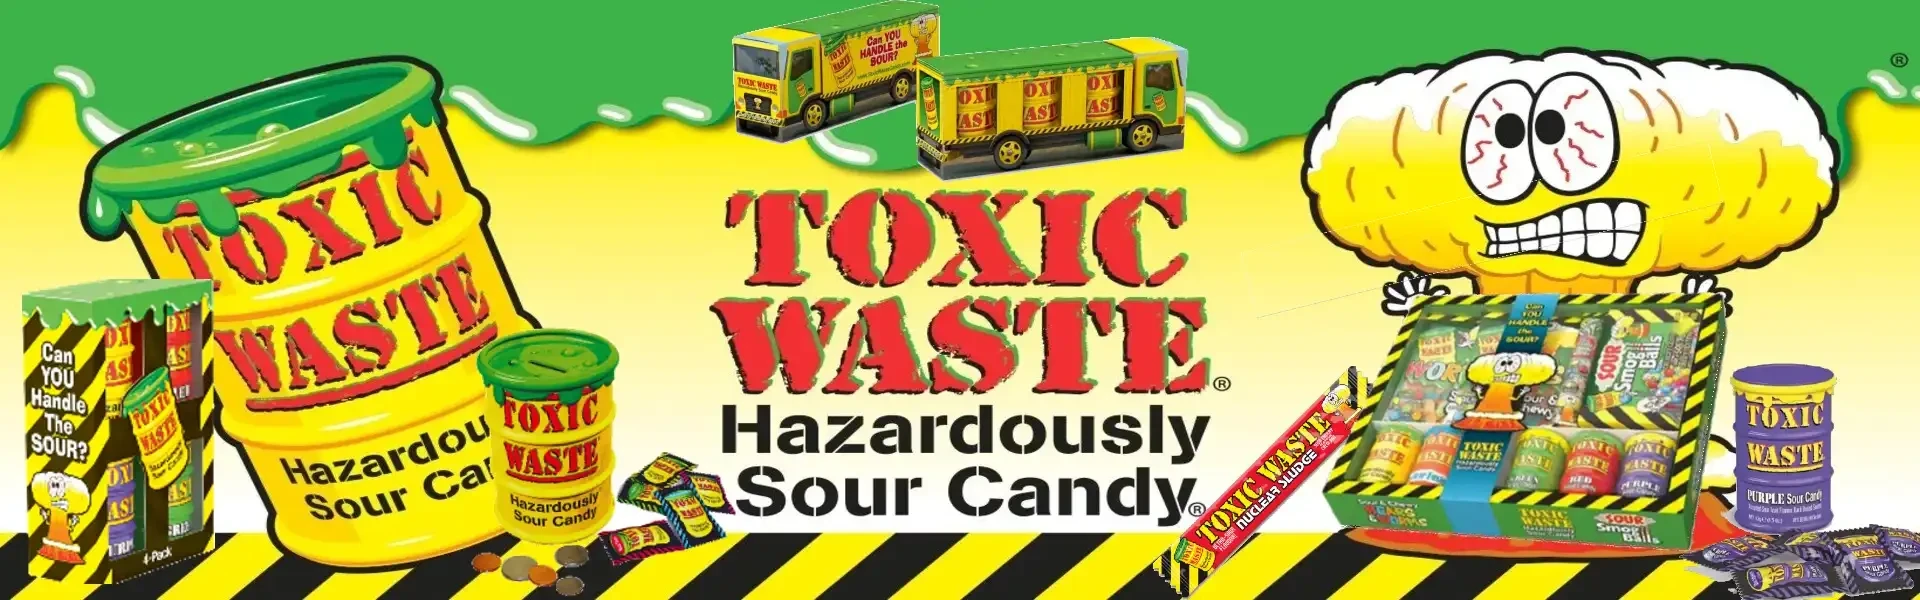 Toxic waste